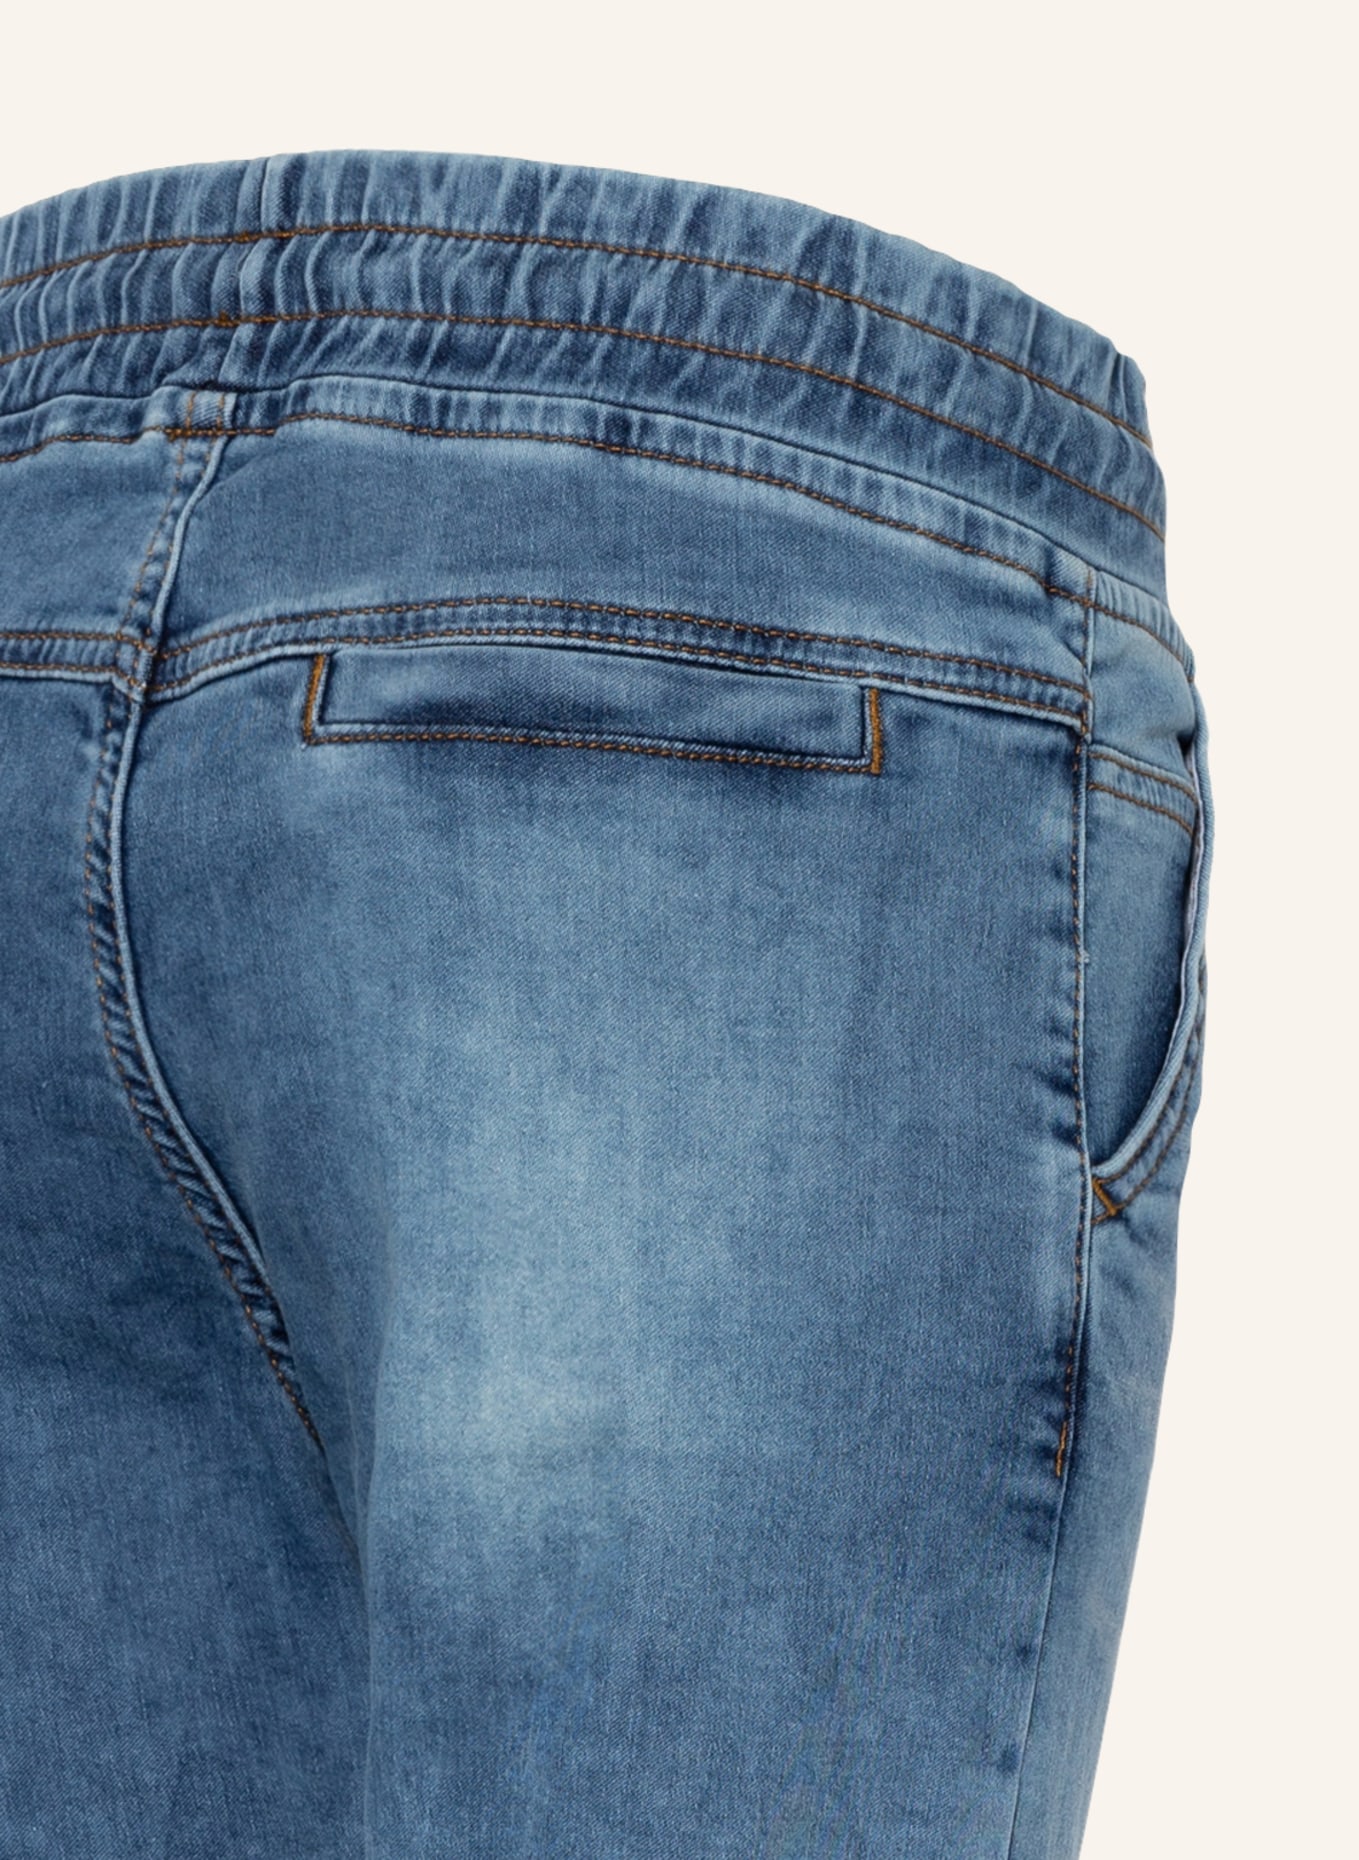 BLUE EFFECT Jeans, Farbe: BLAU (Bild 3)